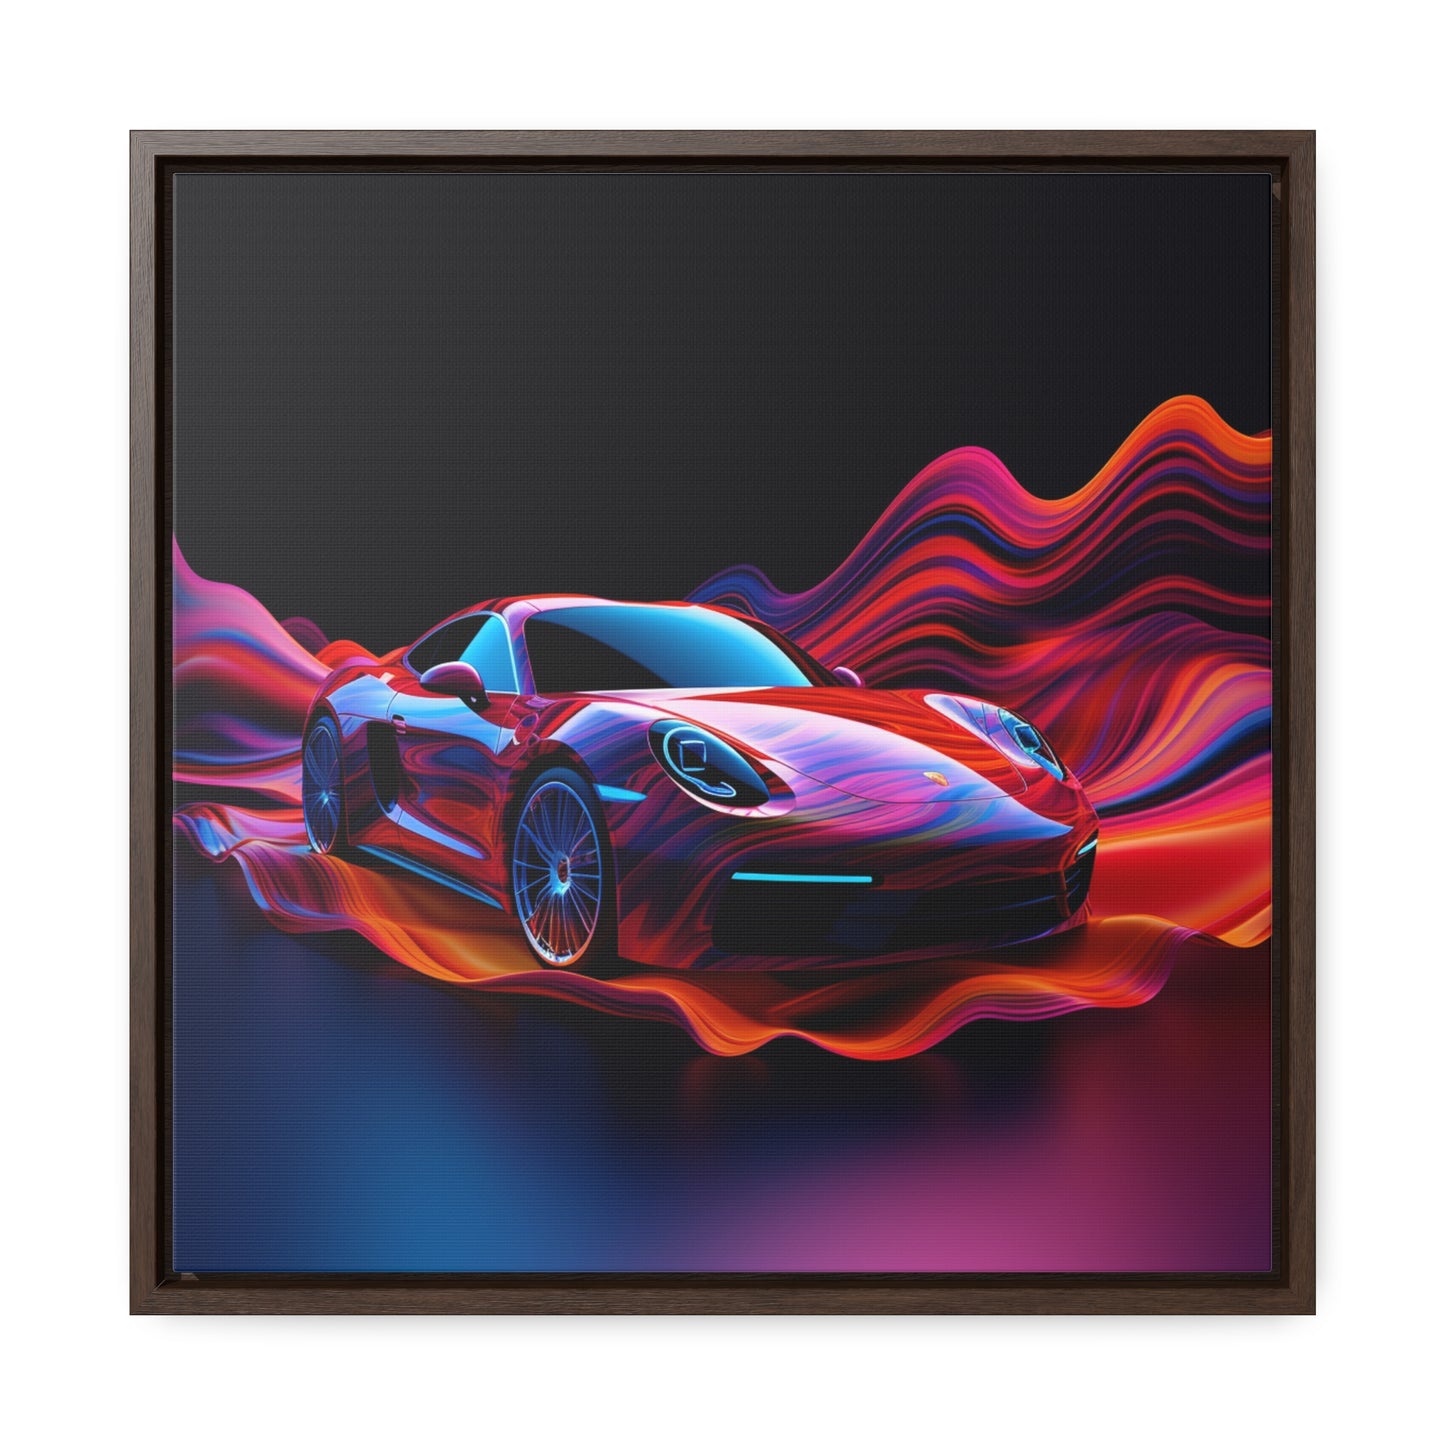 Gallery Canvas Wraps, Square Frame Porsche Water Fusion 4